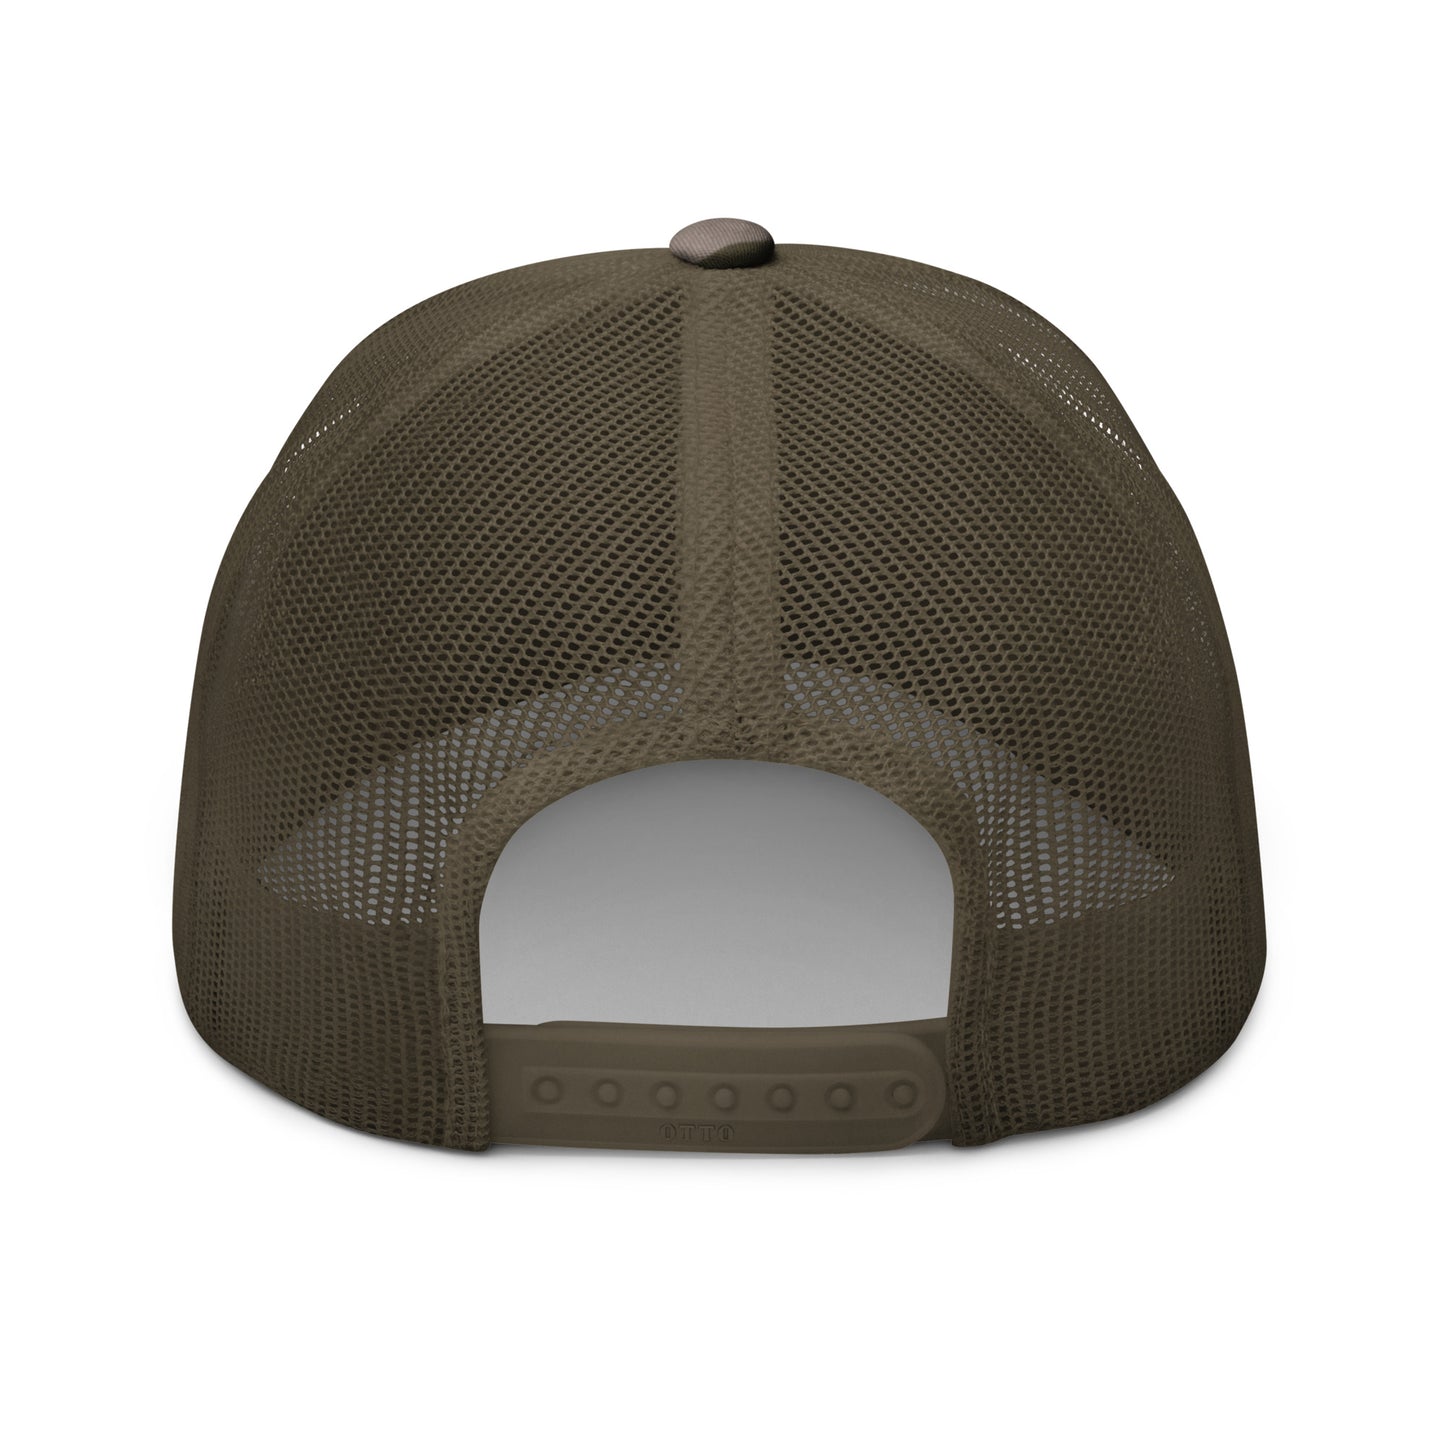 Camouflage trucker hat - Palau